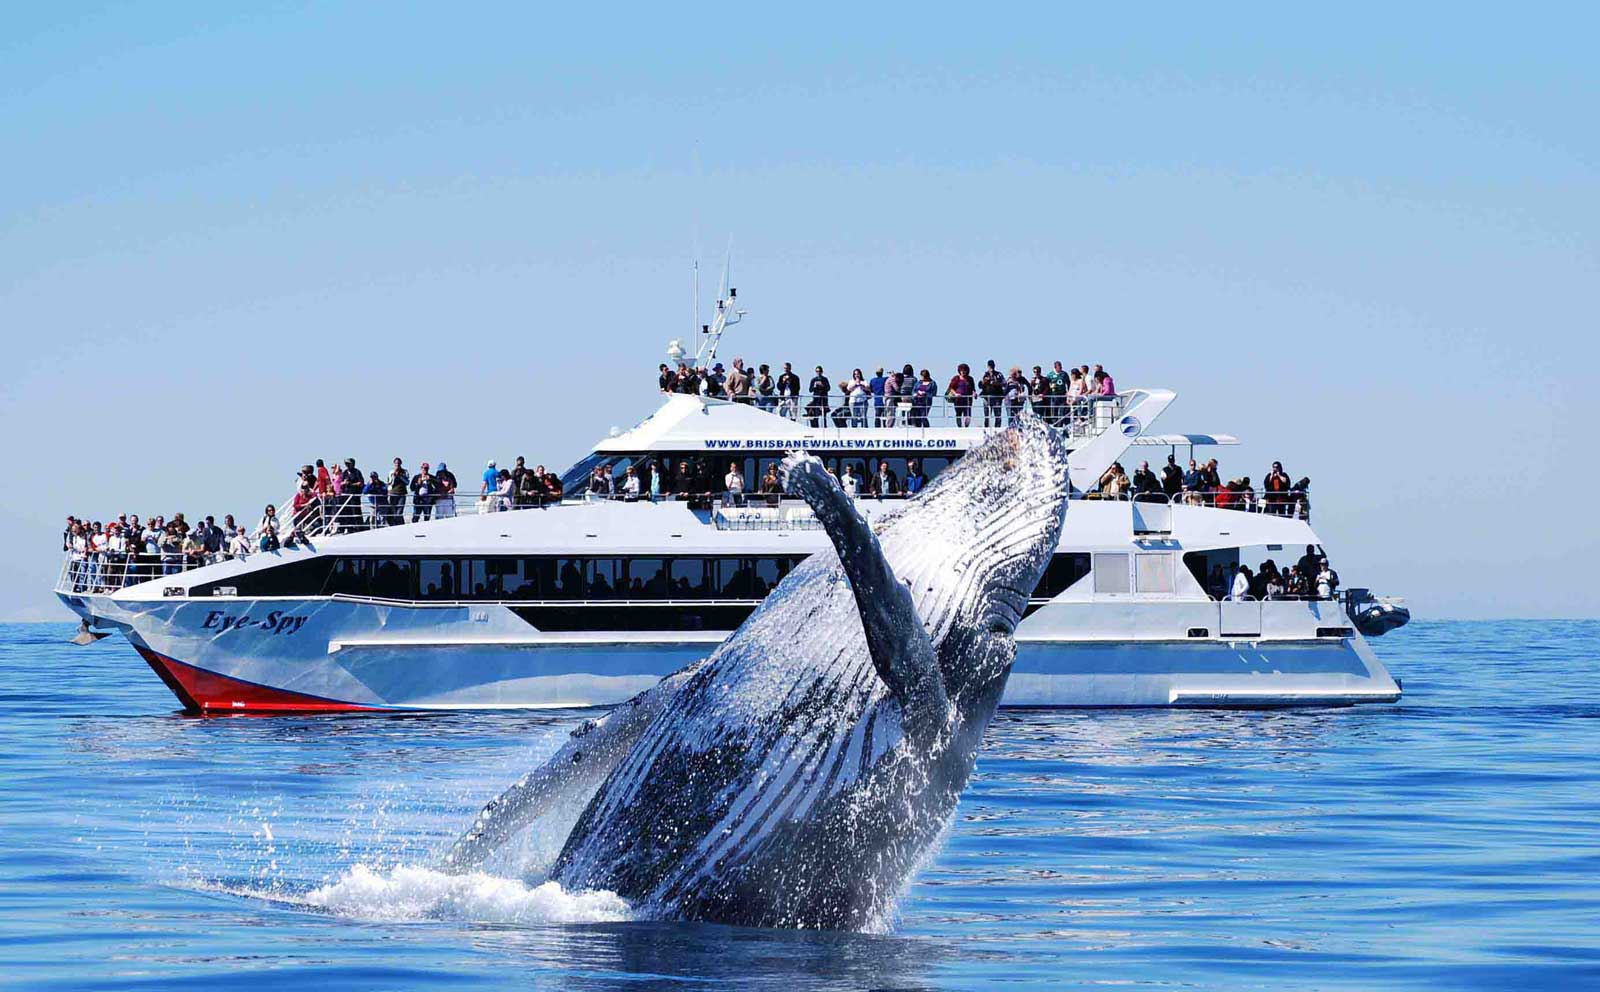 Whale watching aboard the MV Eye Spy